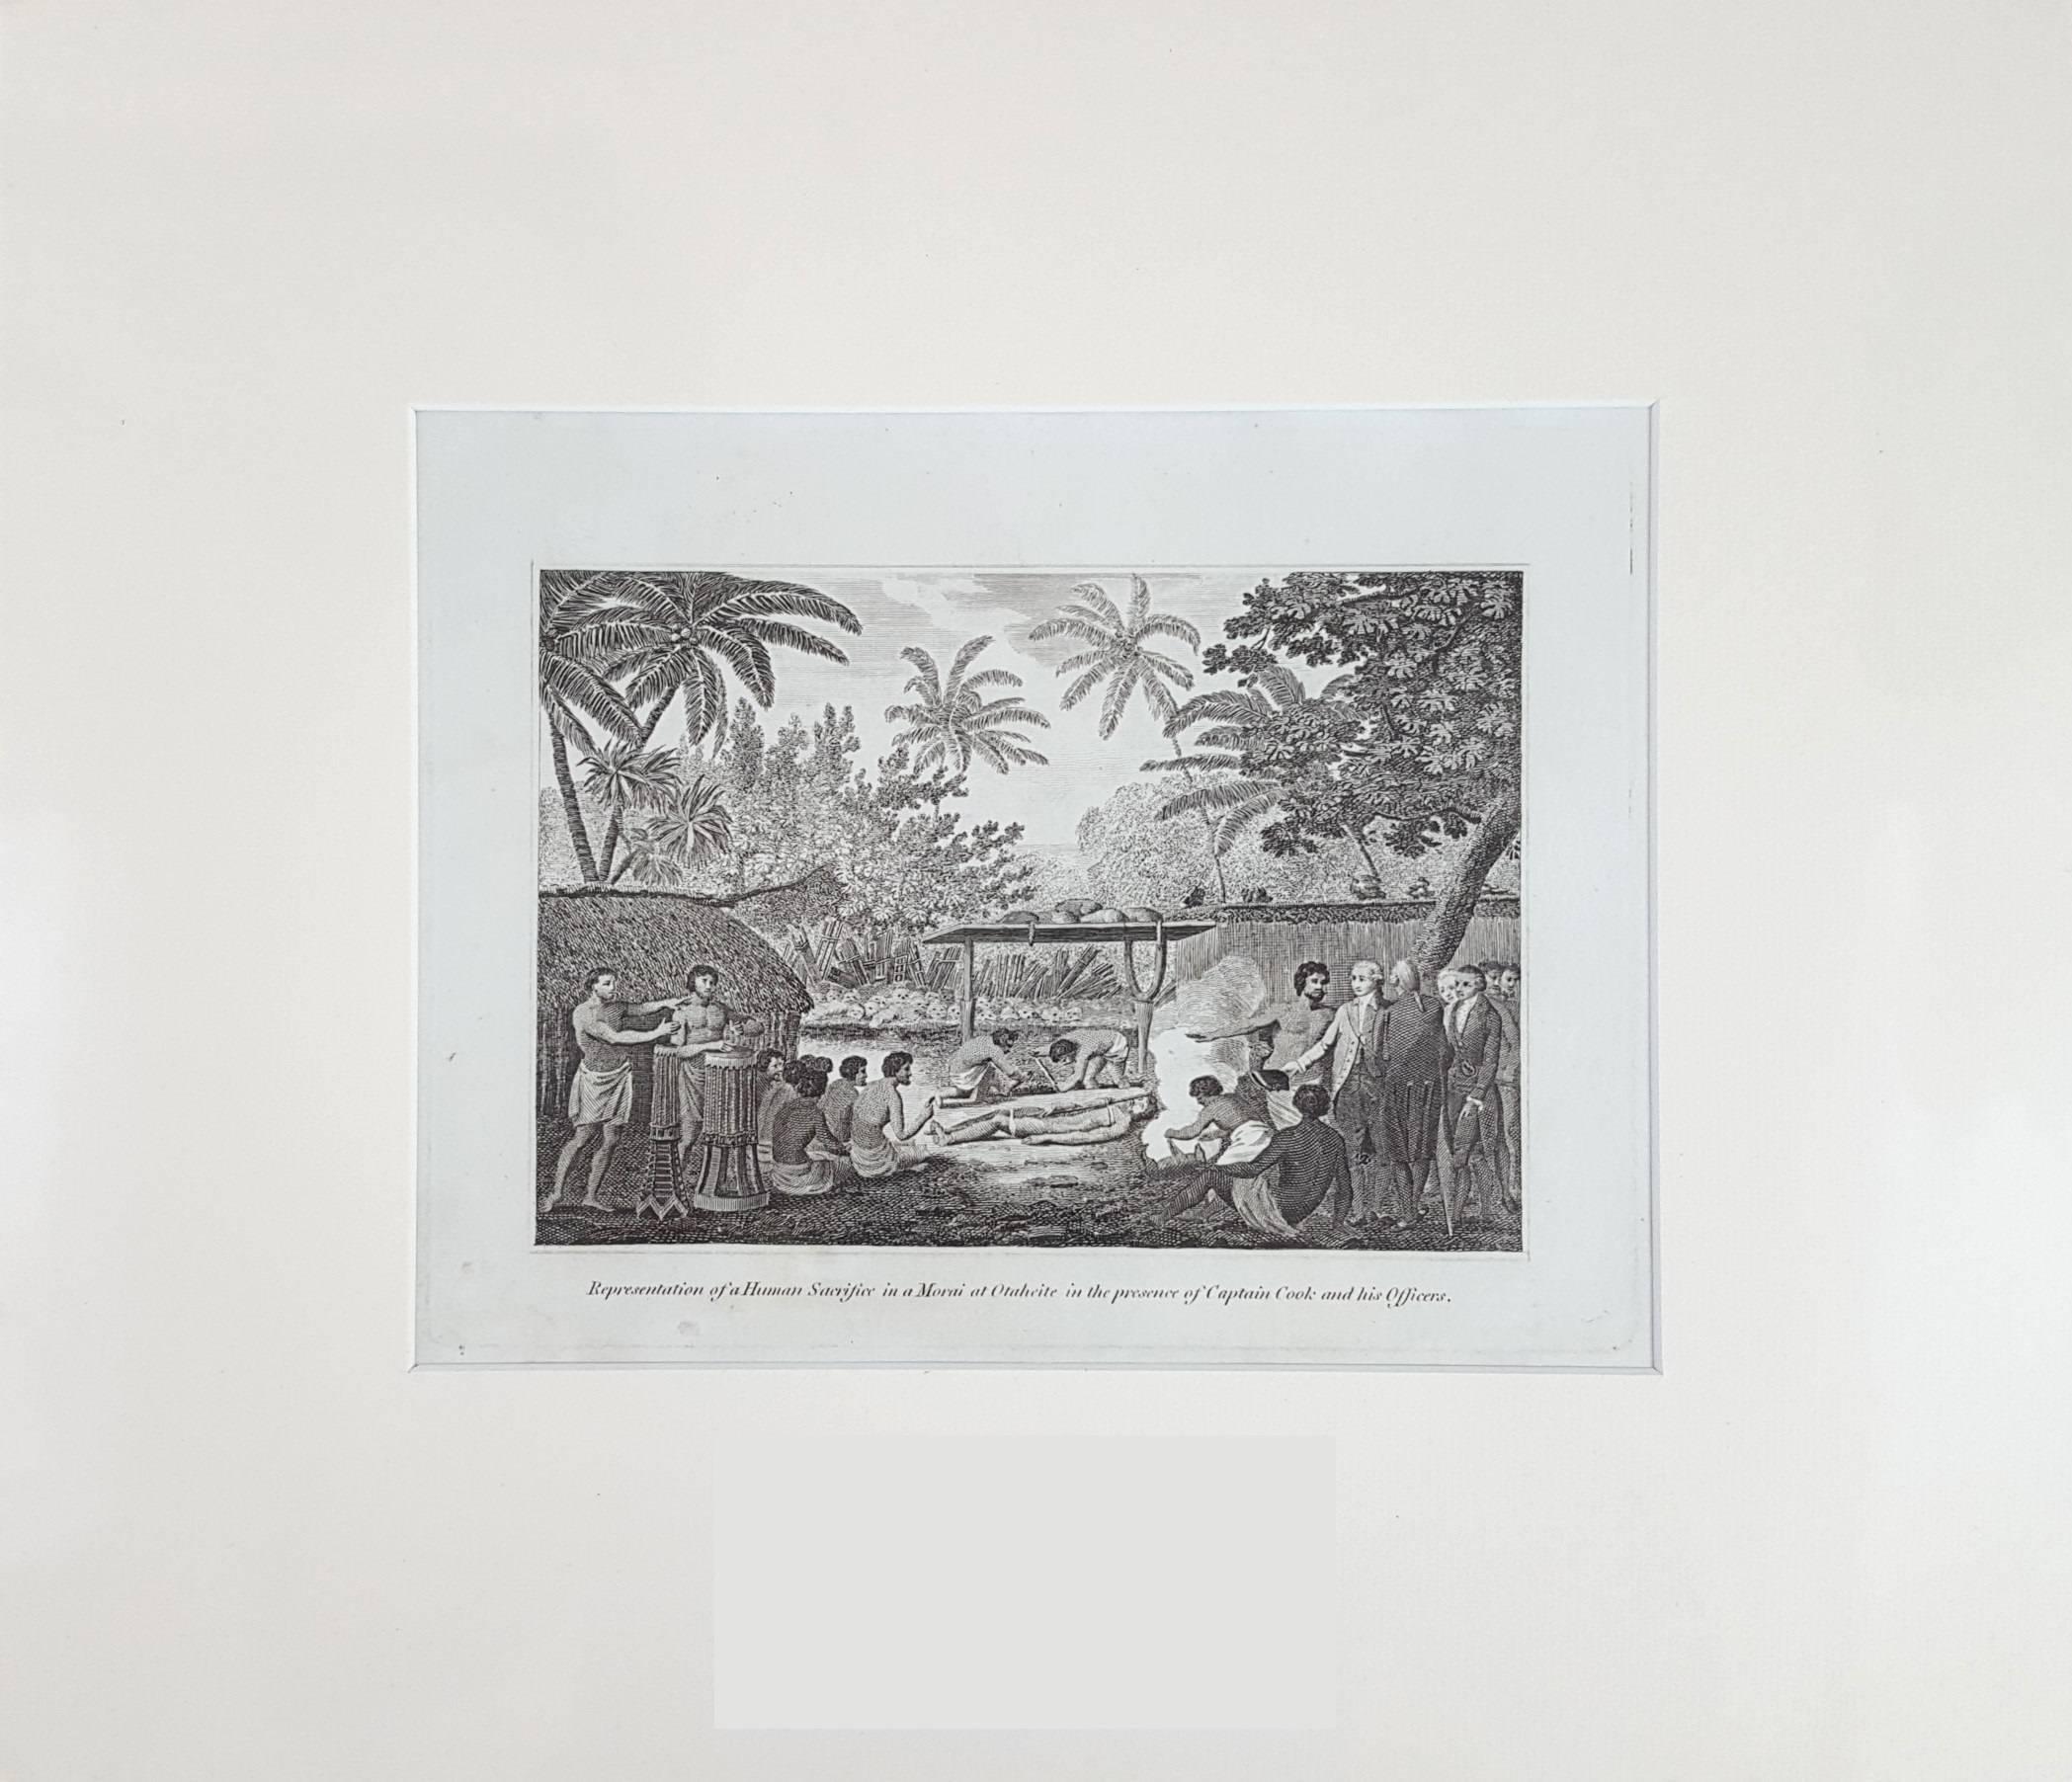 Representation of Human sacrifice with Captain Cook - Print by John Webber